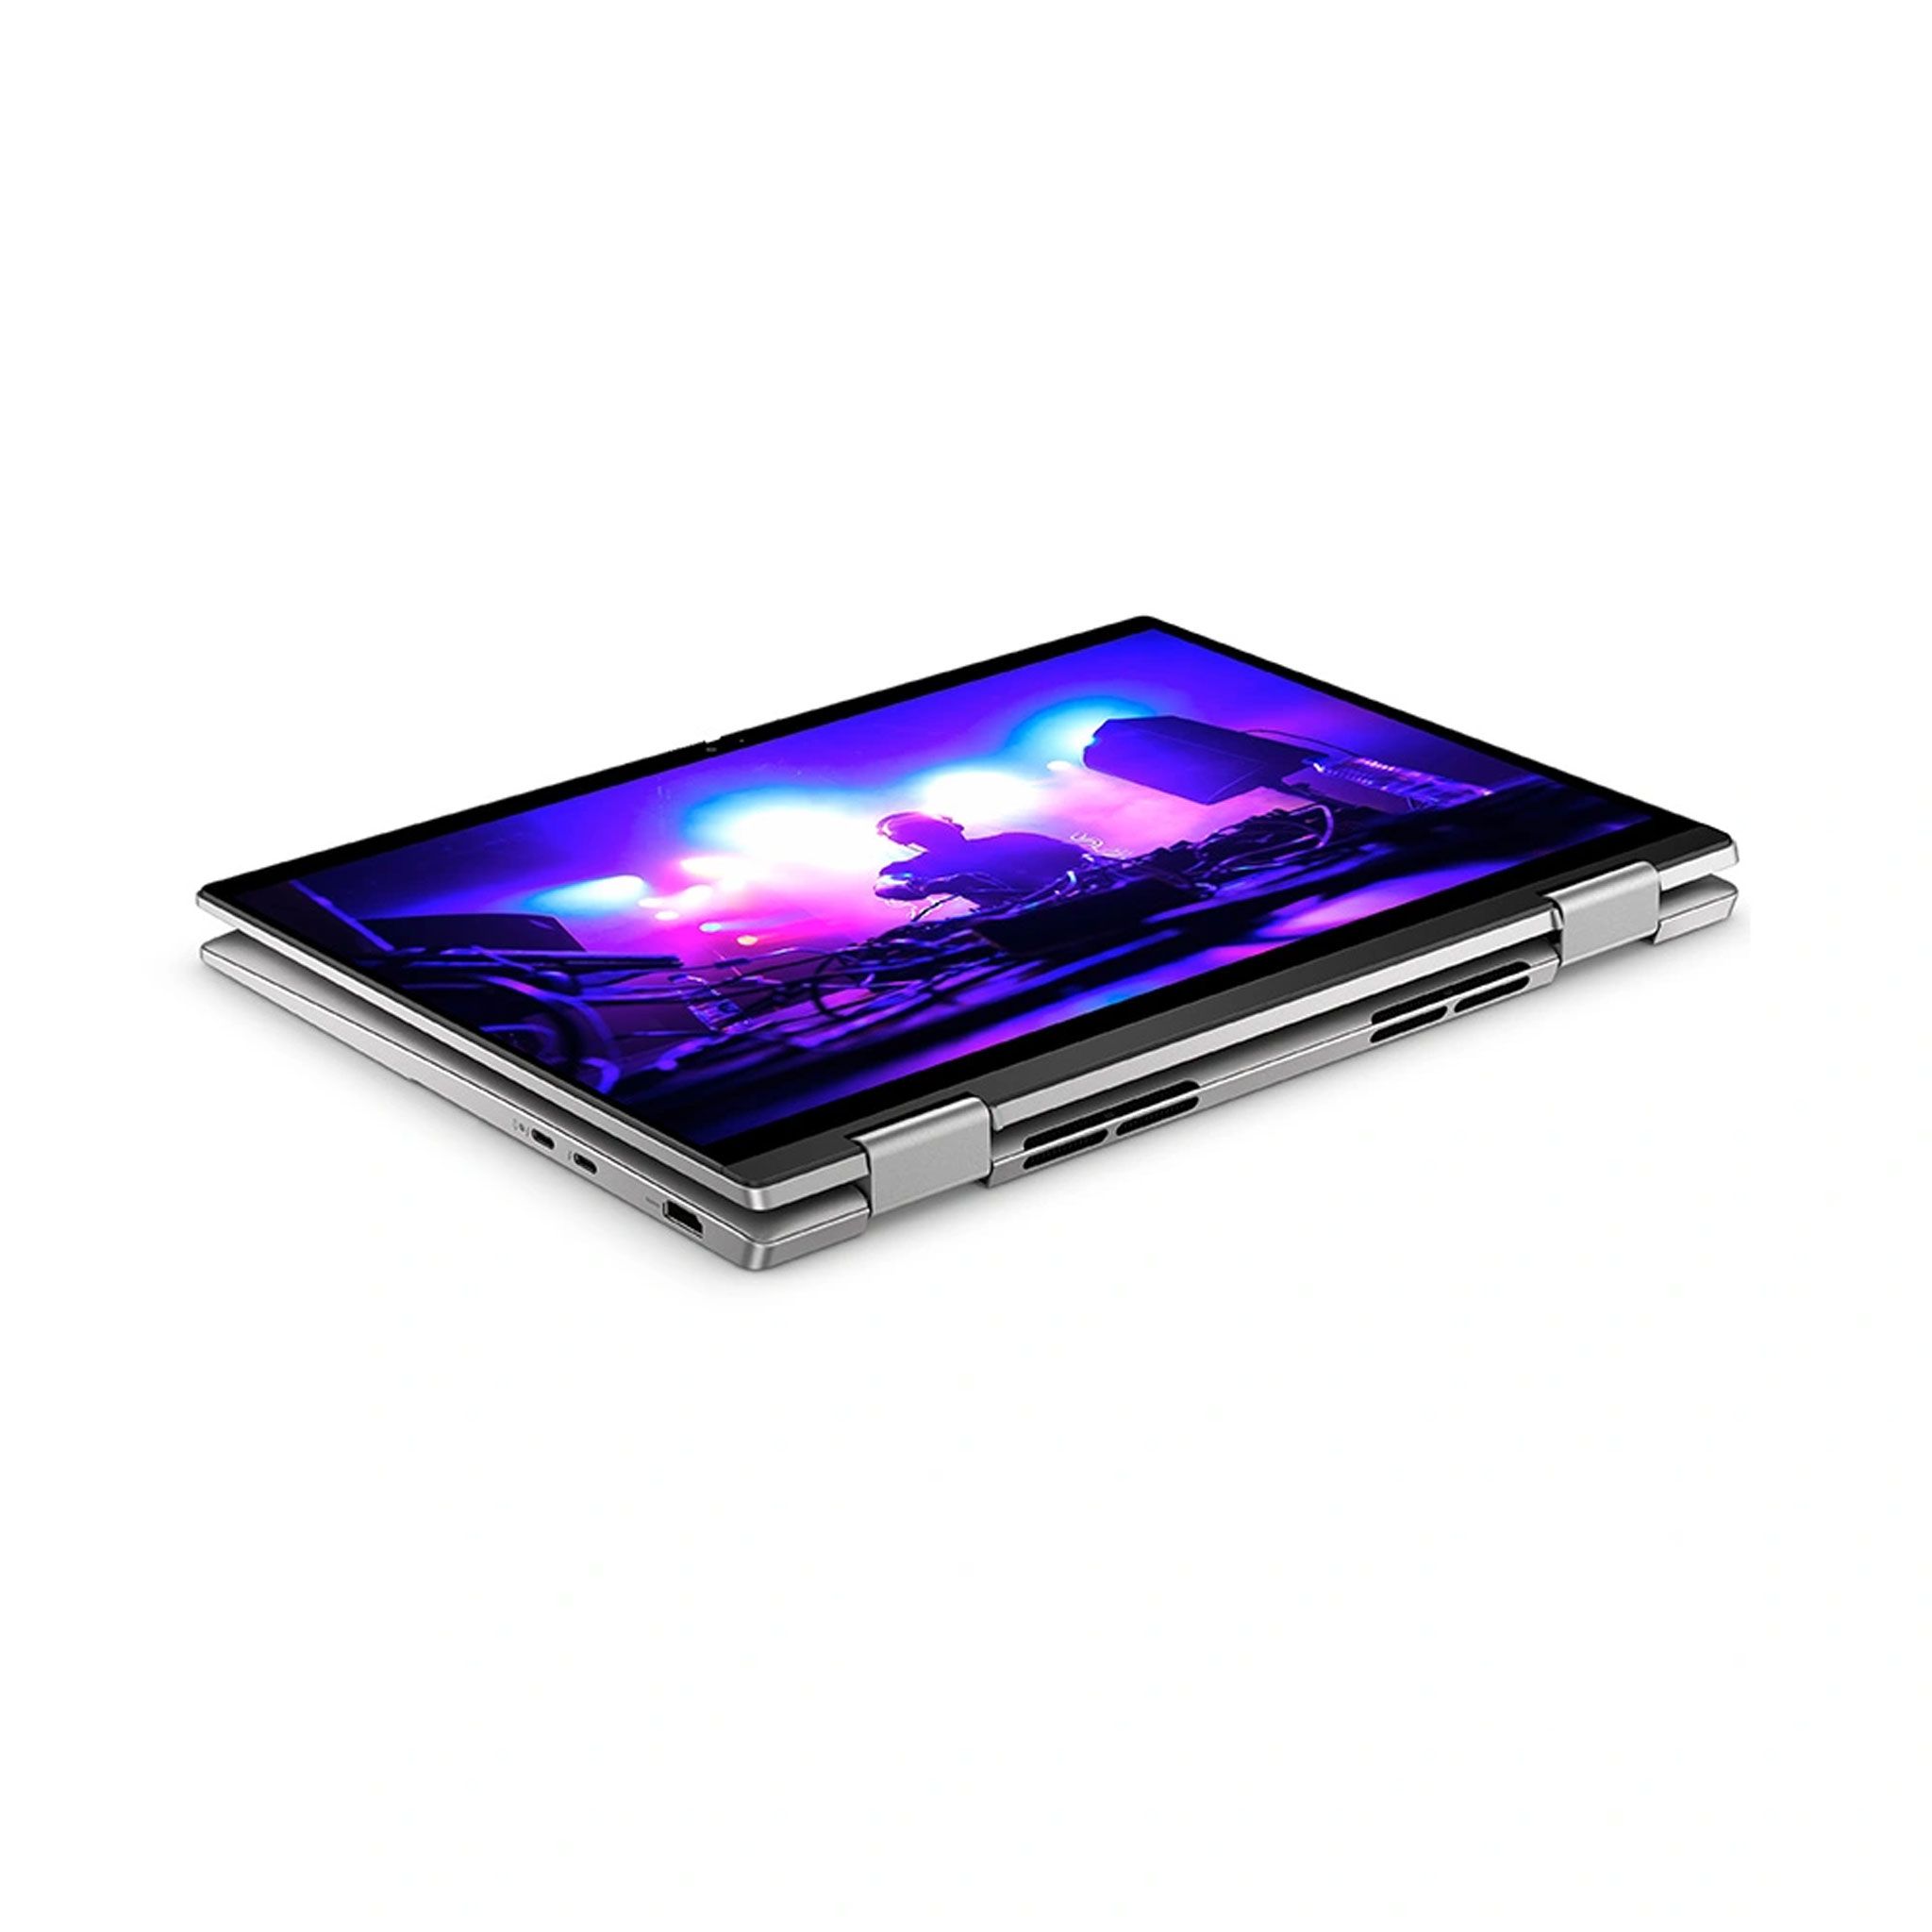 Laptop Dell Inspiron 14 7430 T7430 i7U165W11SLU